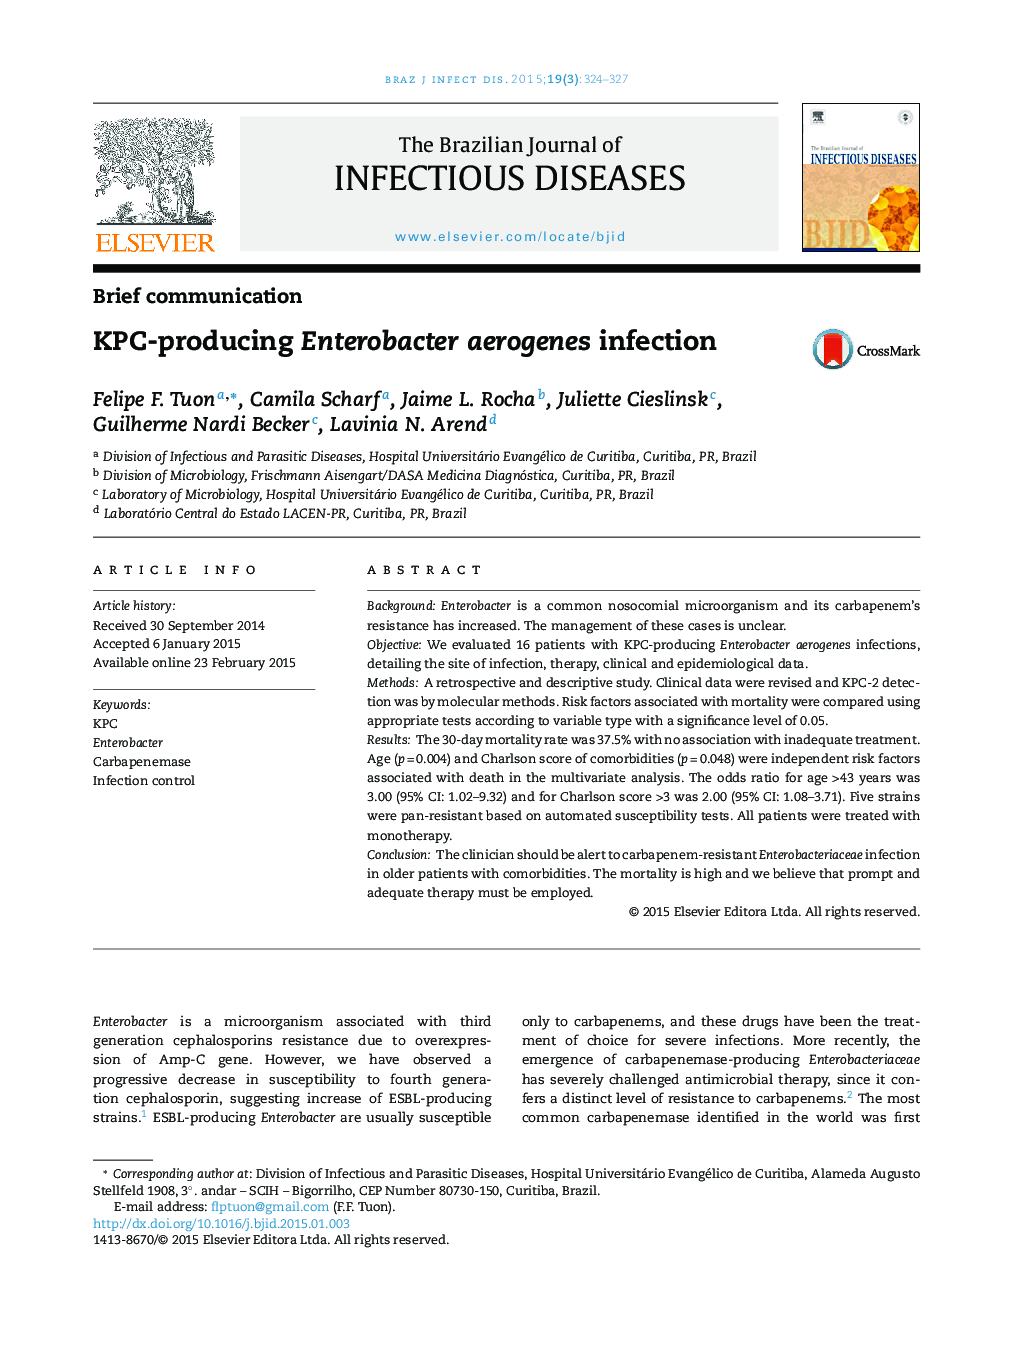 KPC-producing Enterobacter aerogenes infection